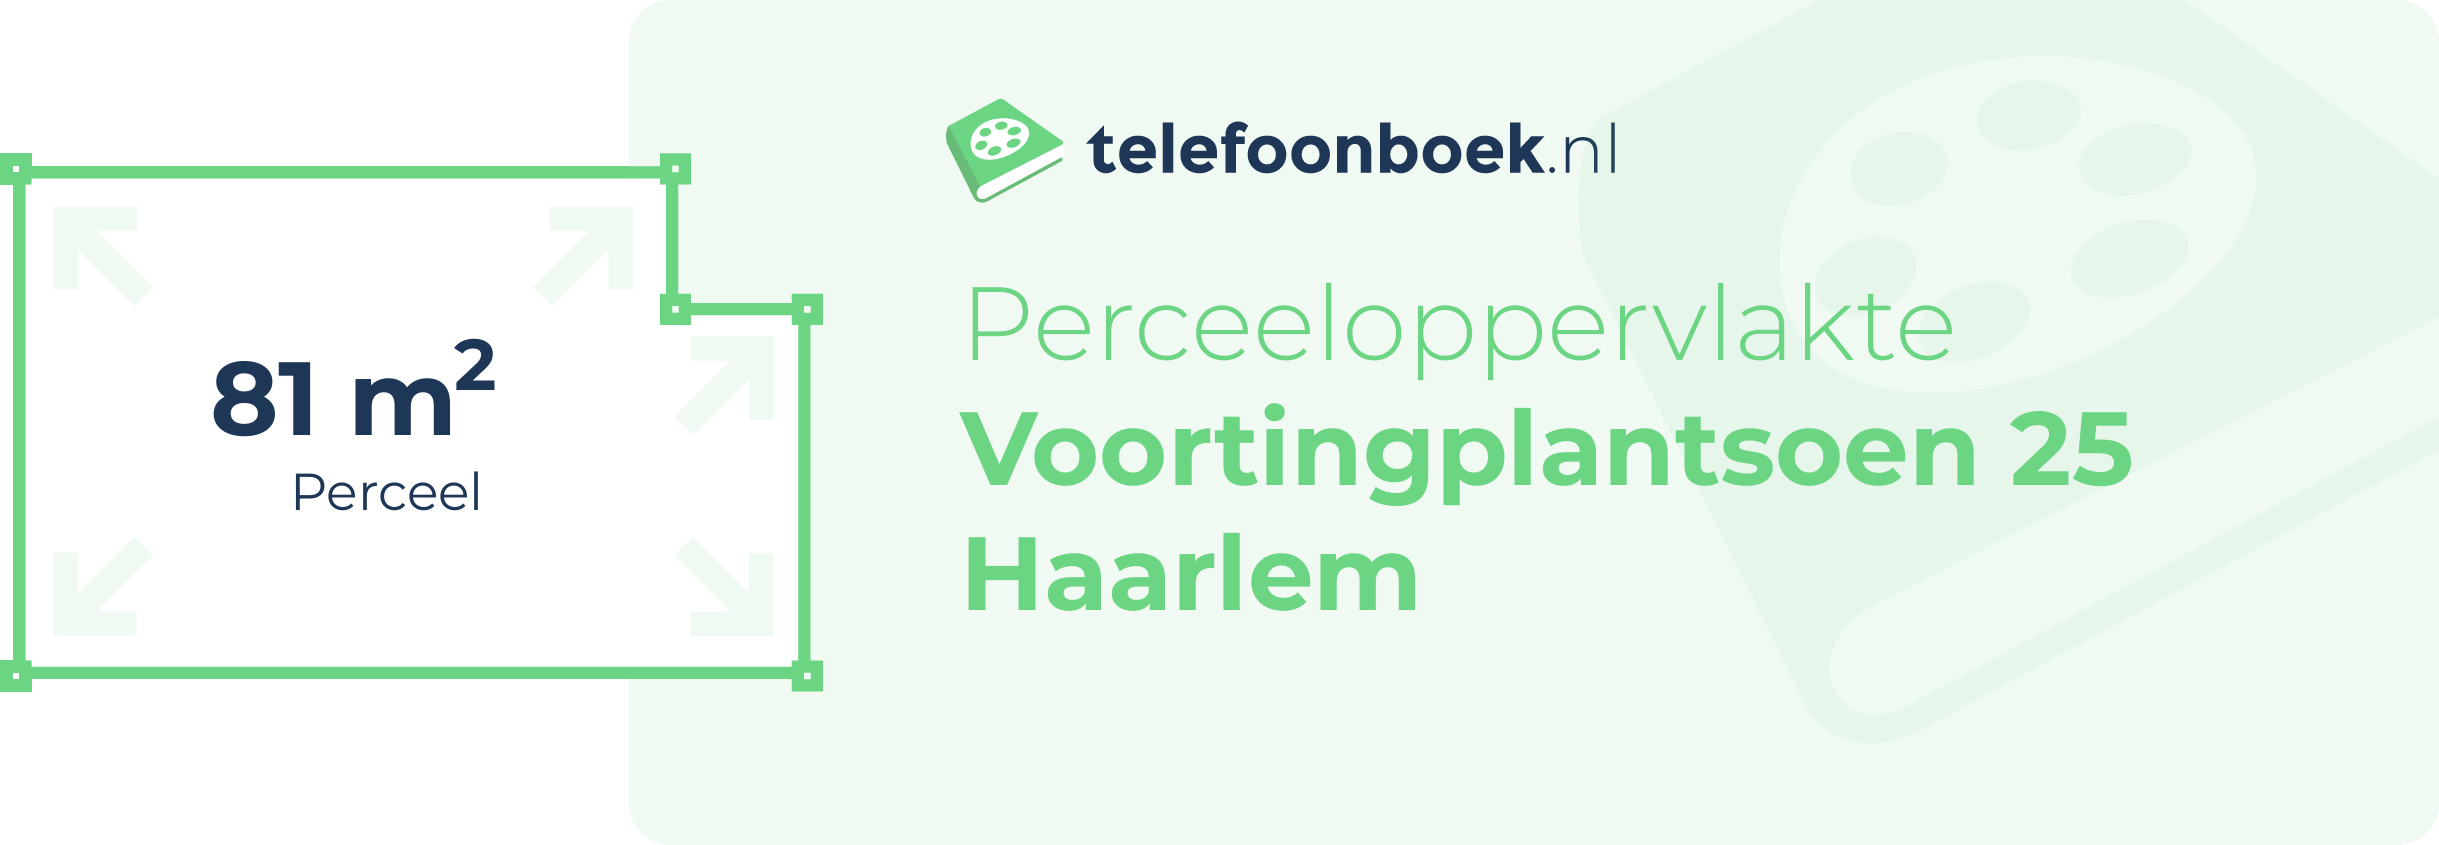 Perceeloppervlakte Voortingplantsoen 25 Haarlem